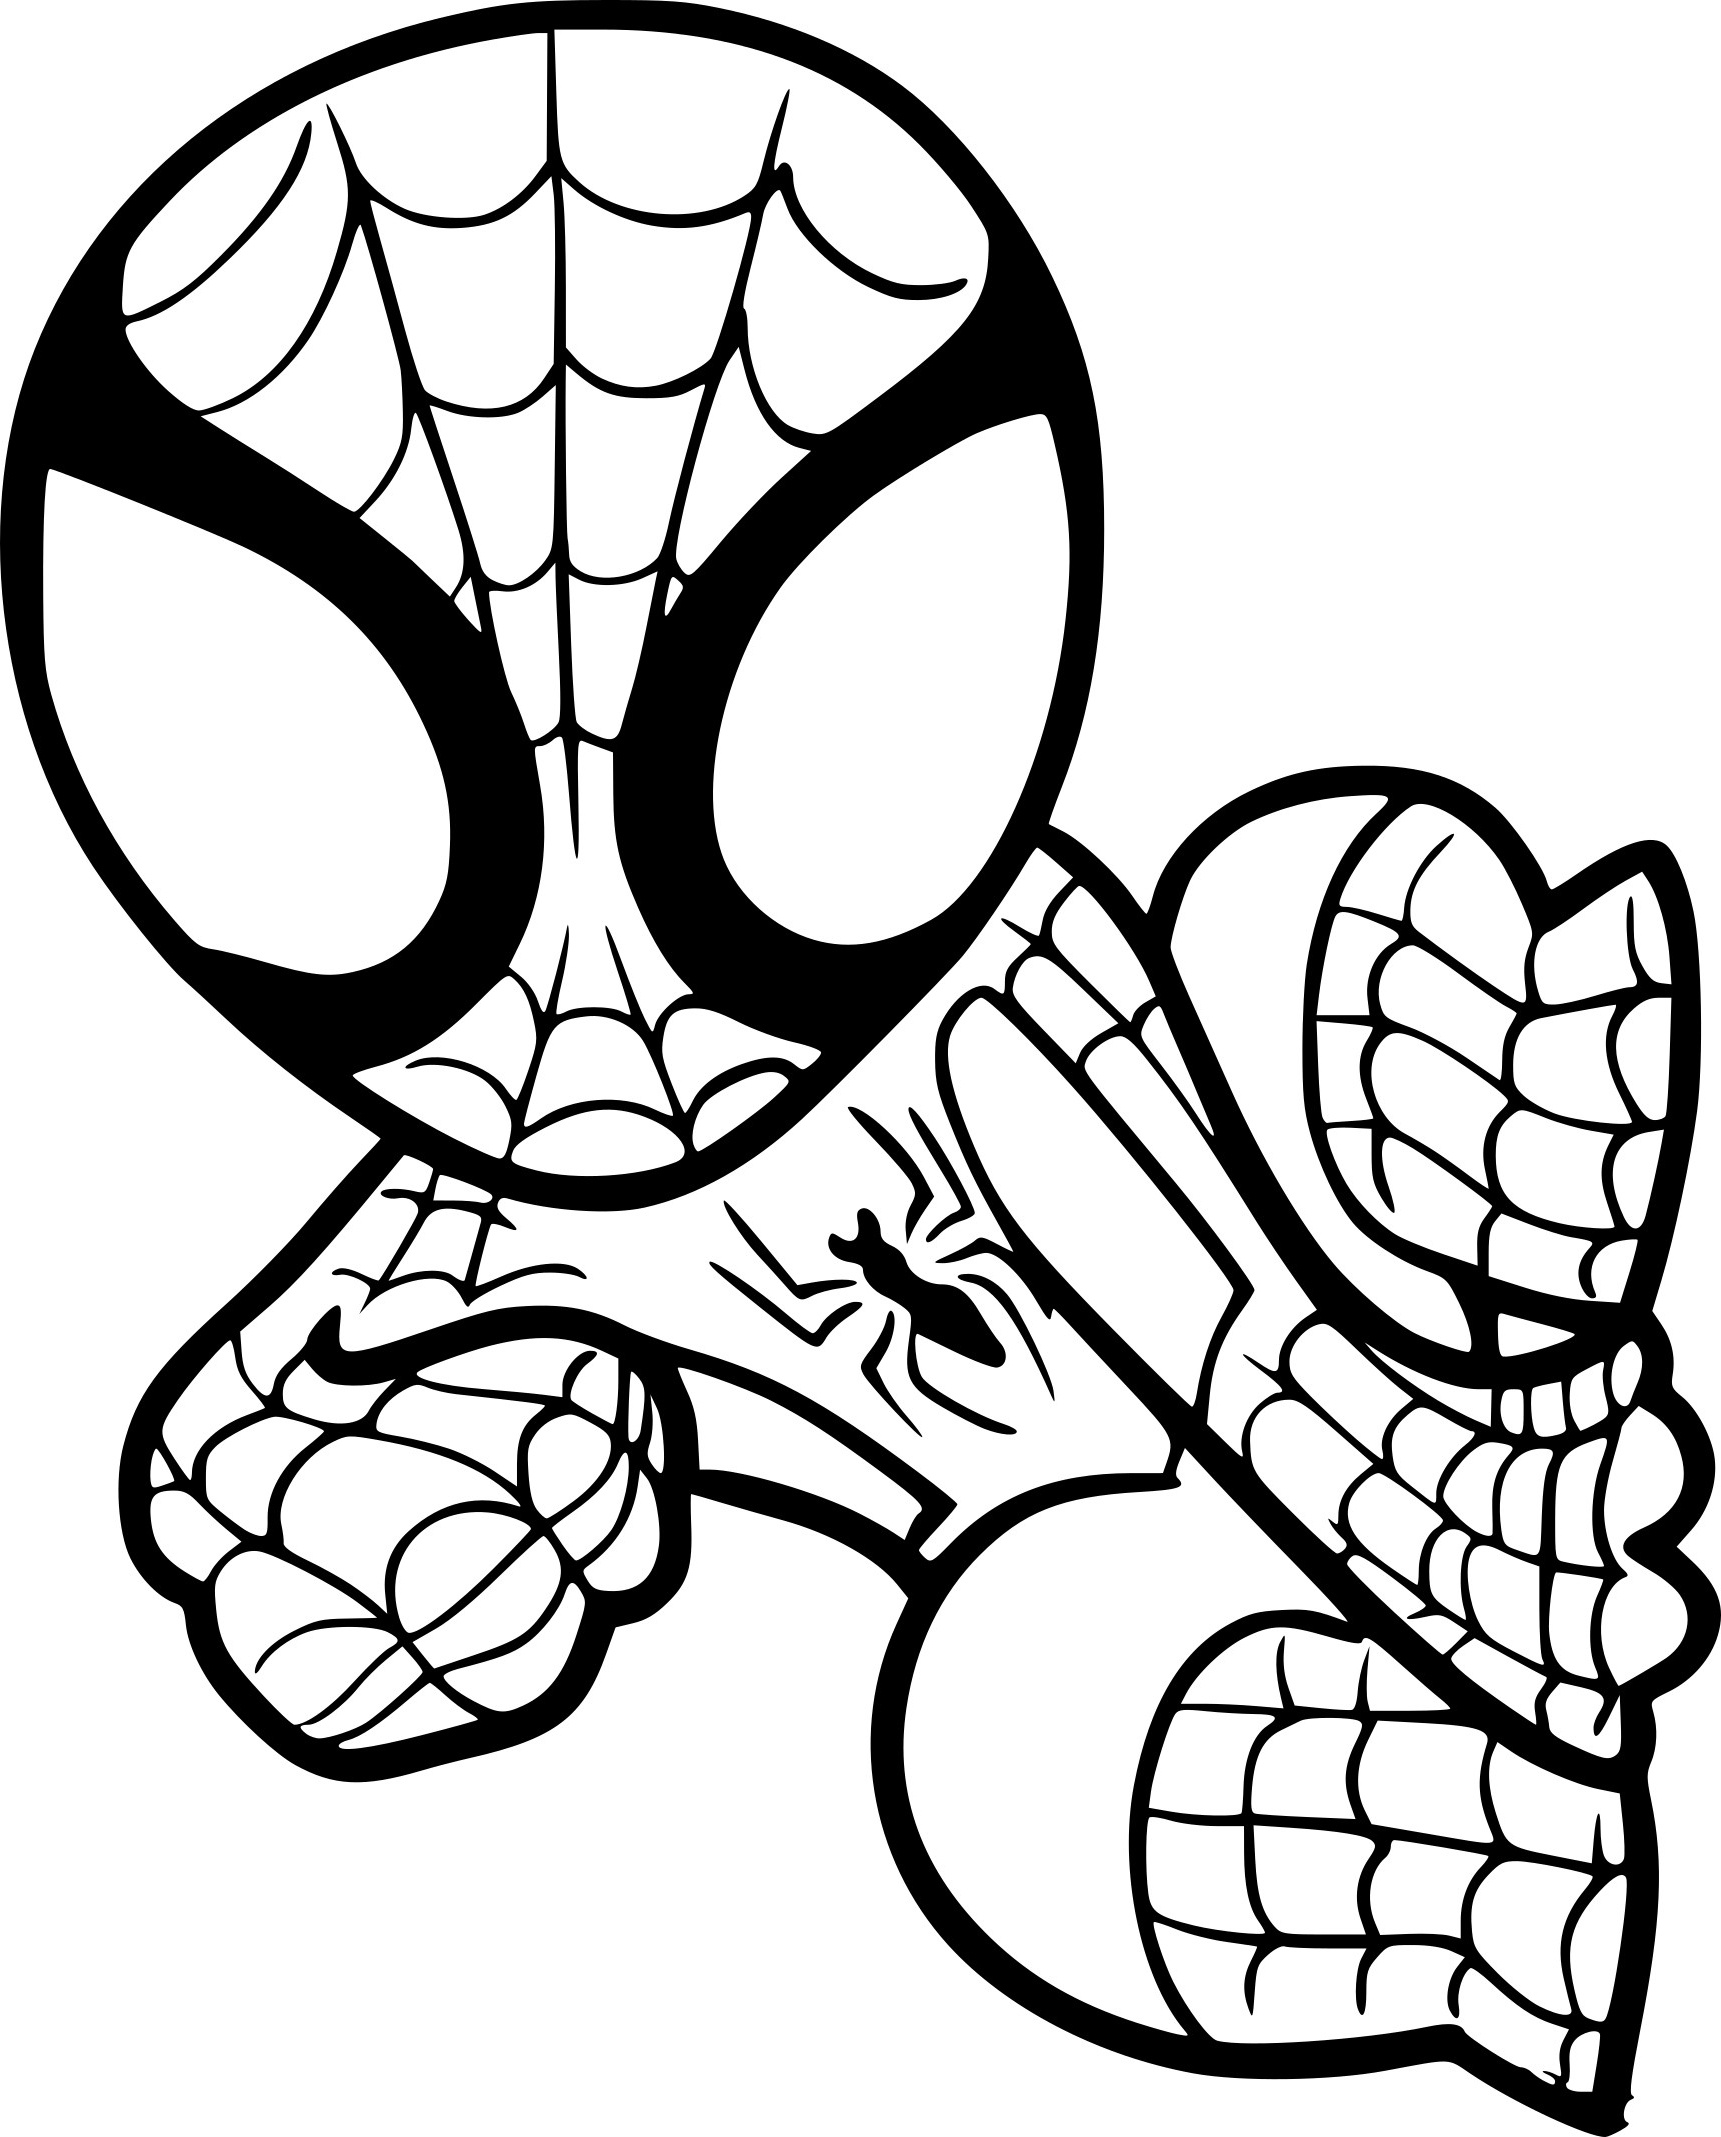 Dessin Spiderman Facile Bestof Image Coloriage Spiderman Facile à Imprimer Sur Coloriages Fo